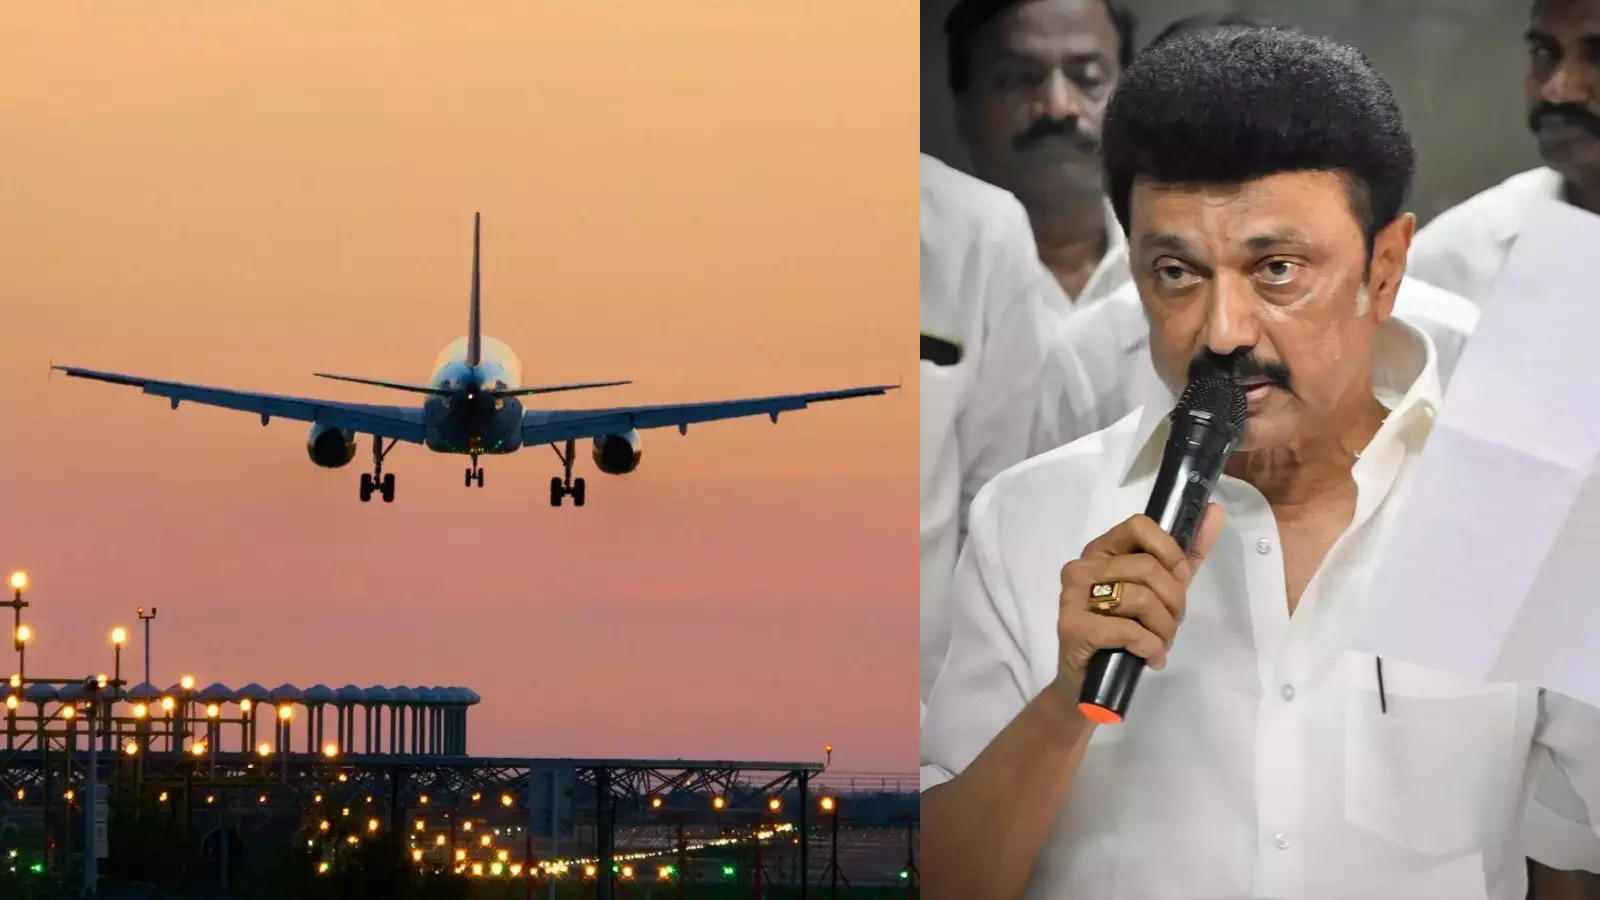 Hosur to soon get international airport, says Tamil Nadu CM M K Stalin